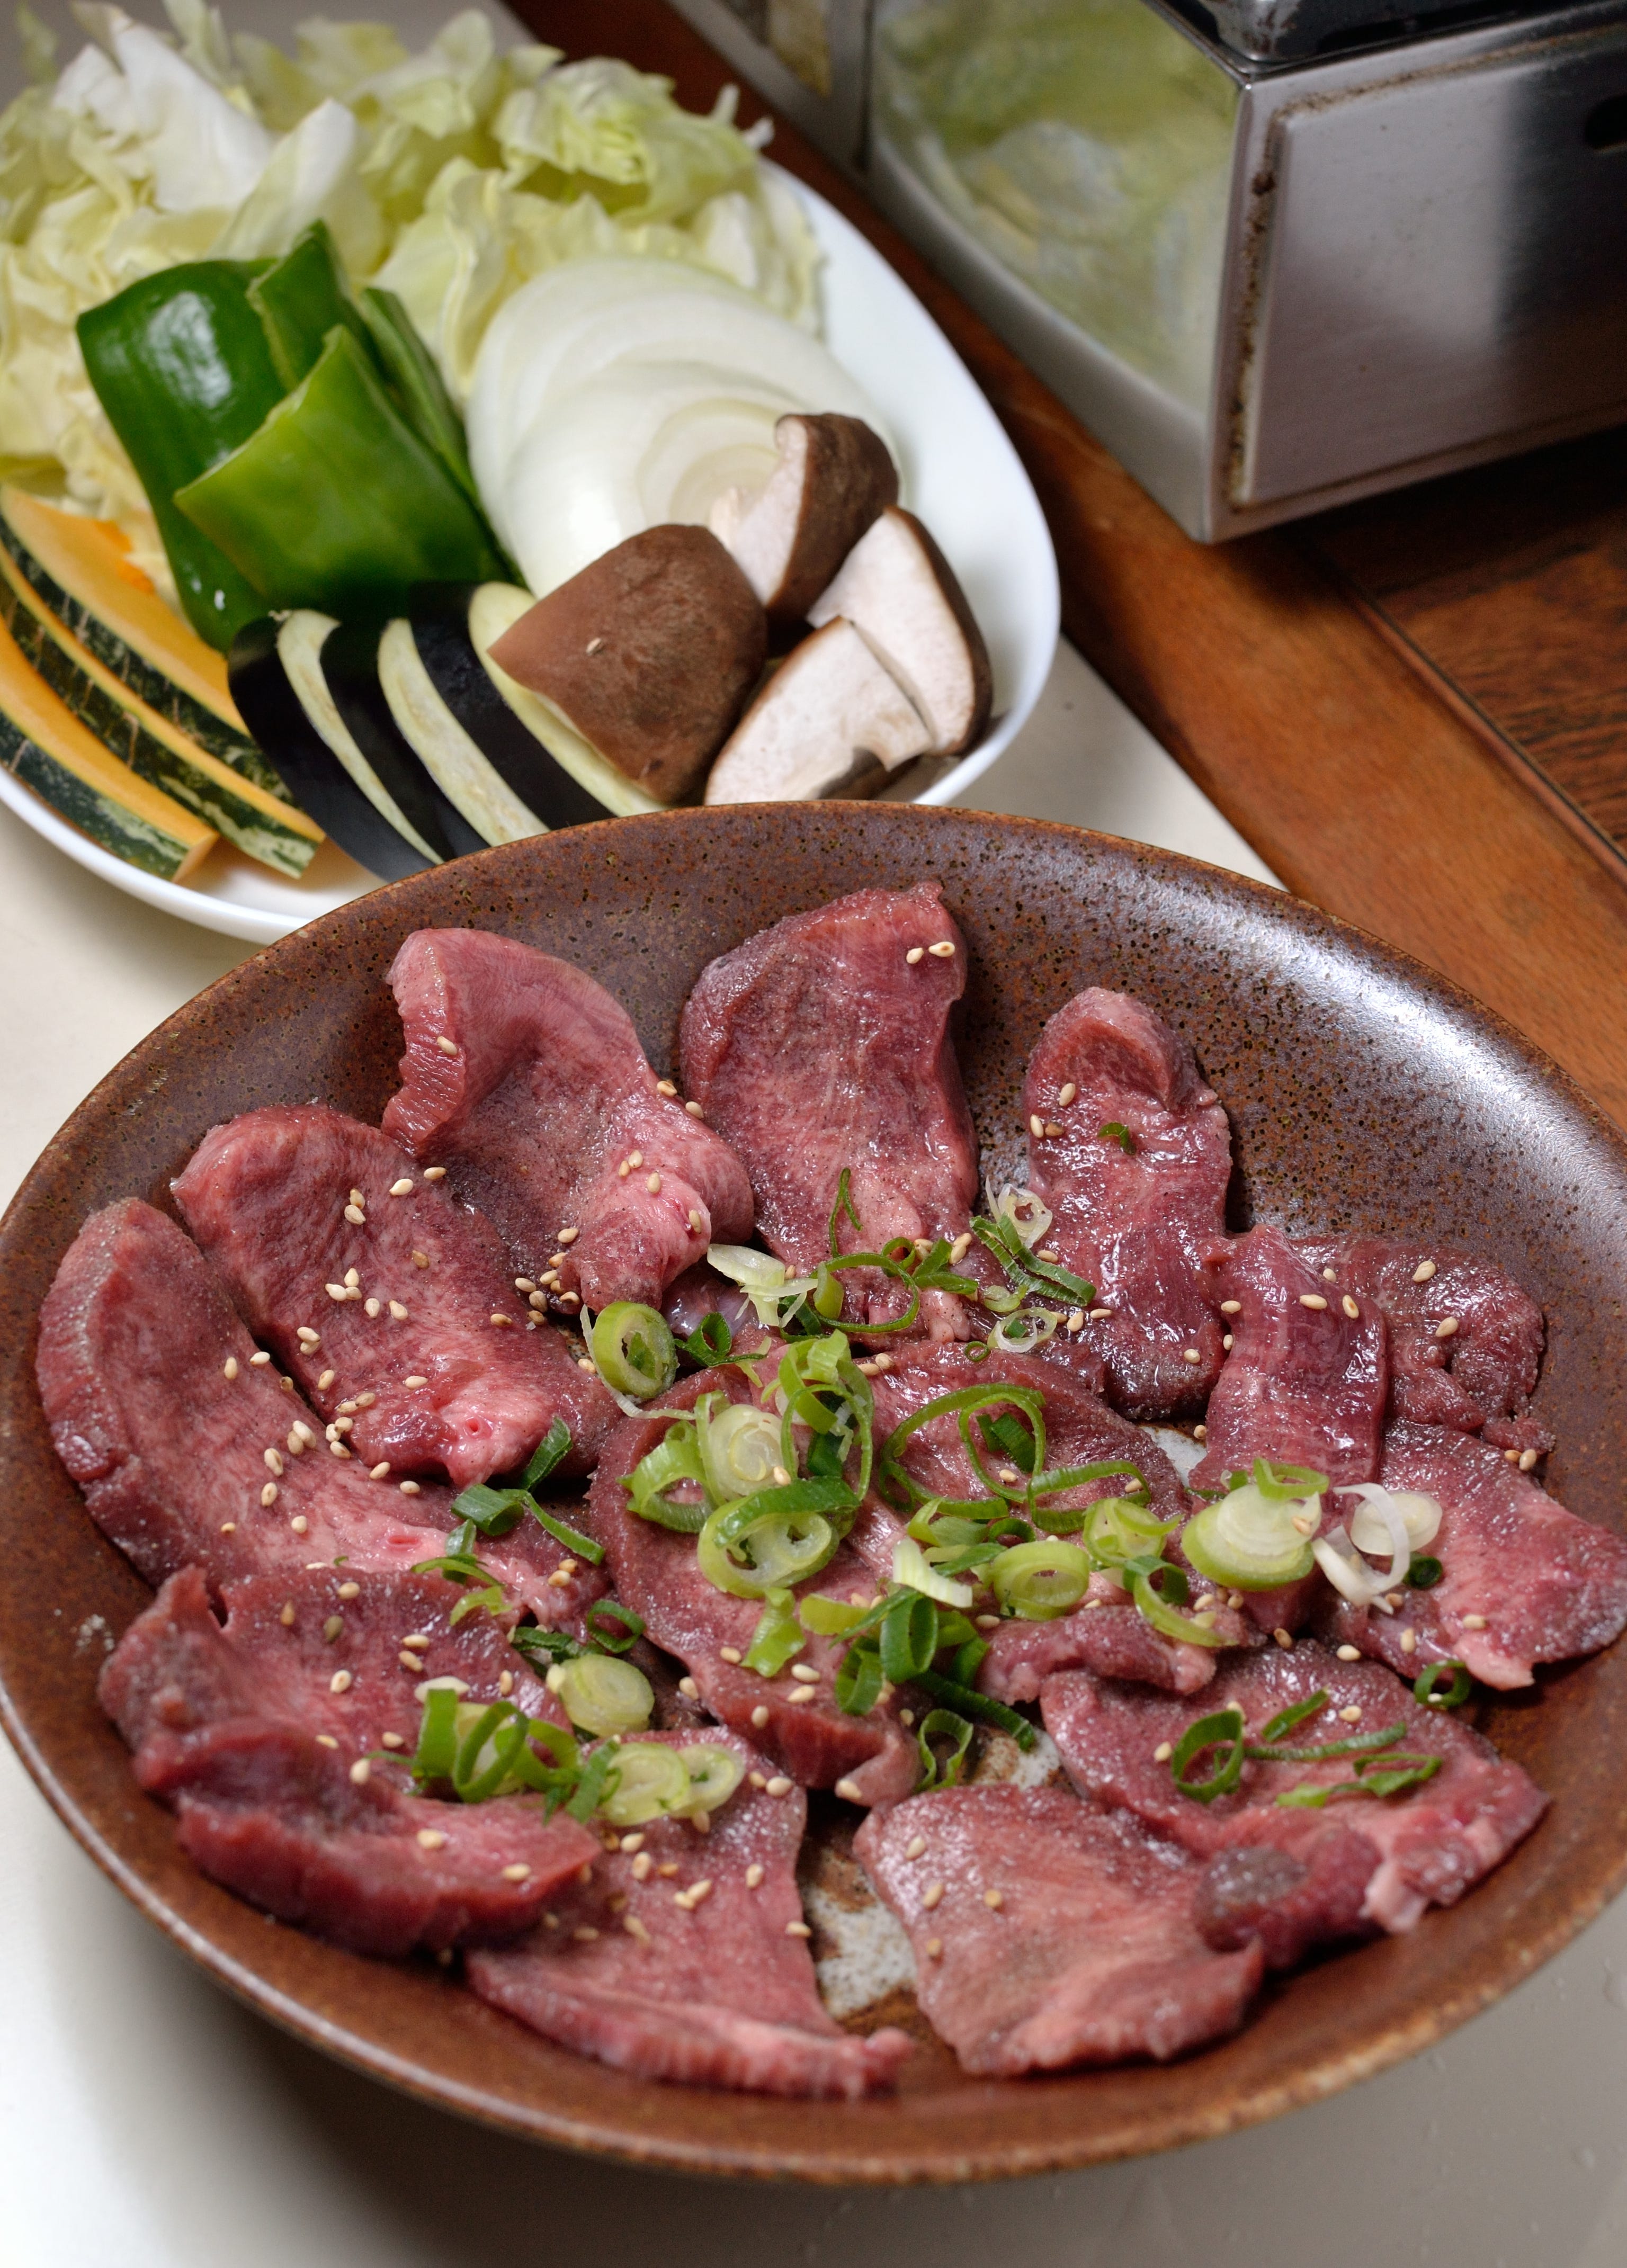 Tan-Yakiniku is BBQ beef tongue. “Yakiniku” literally means “to grill